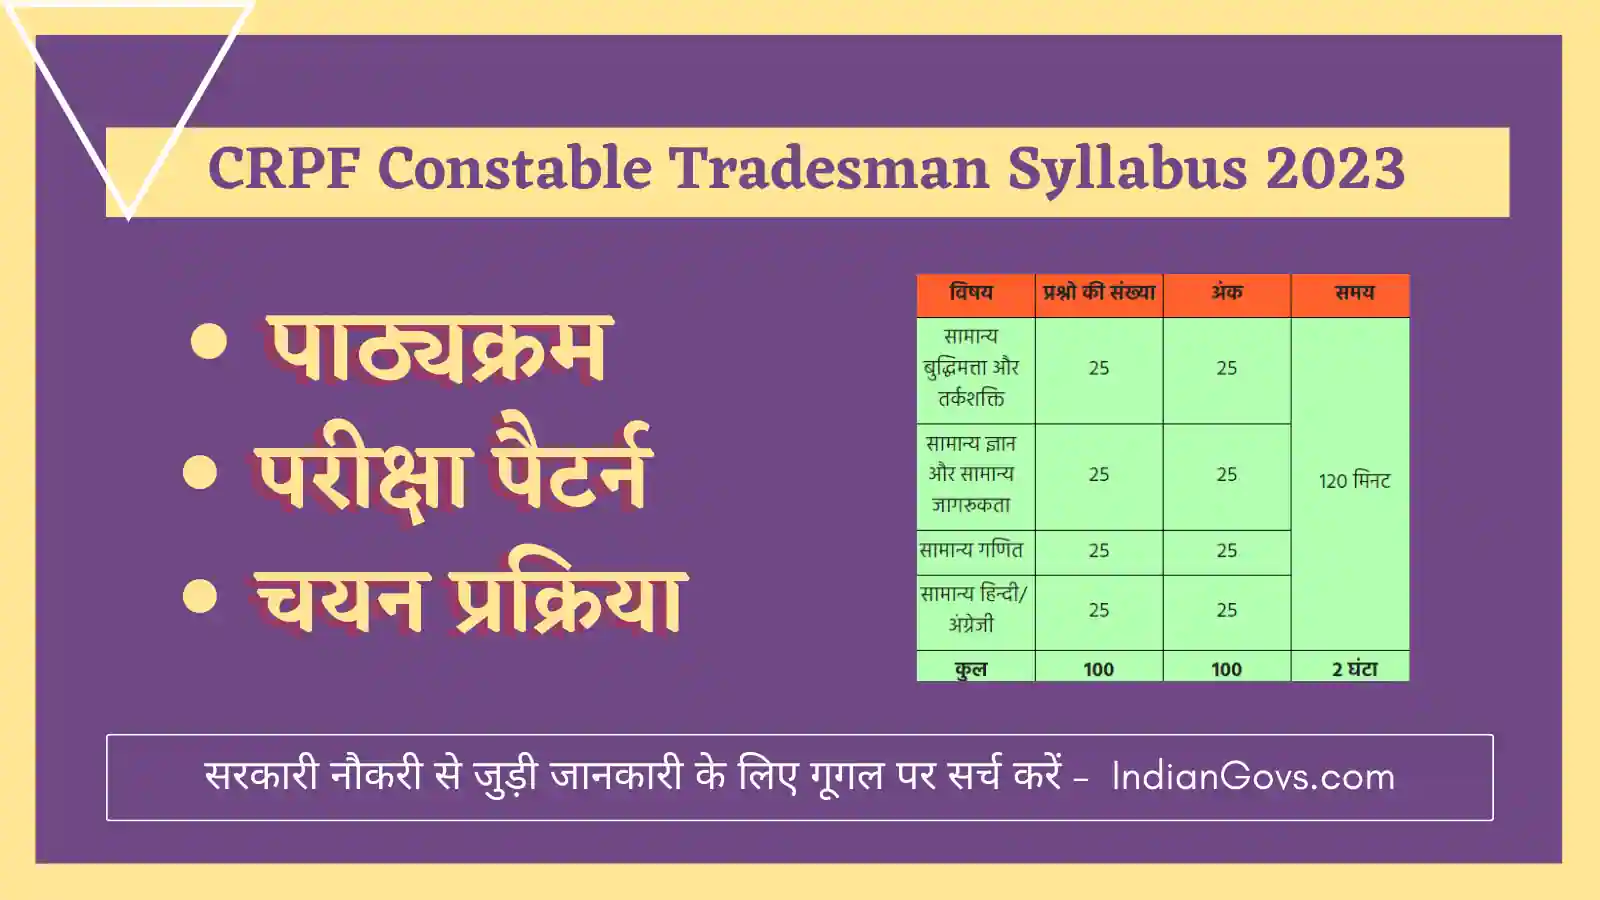 CRPF Constable Tradesman Syllabus 2023 in hindi
